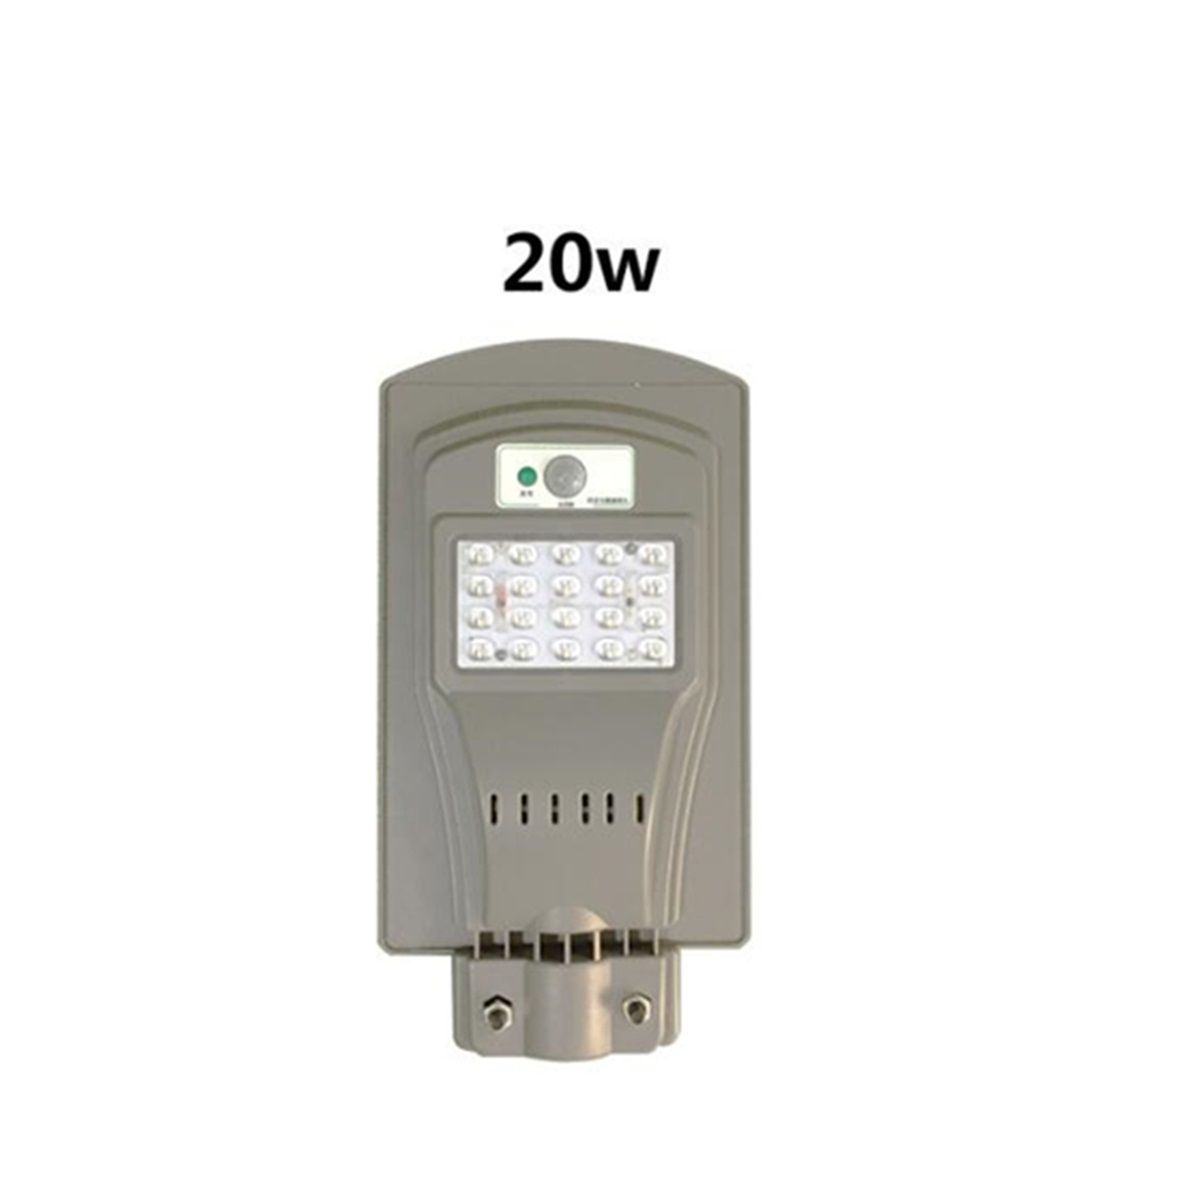 204060W-LED-Solar-Street-Light-Radar-PIR-Motion-Sensor-Garden-Wall-Outdoor-1473146